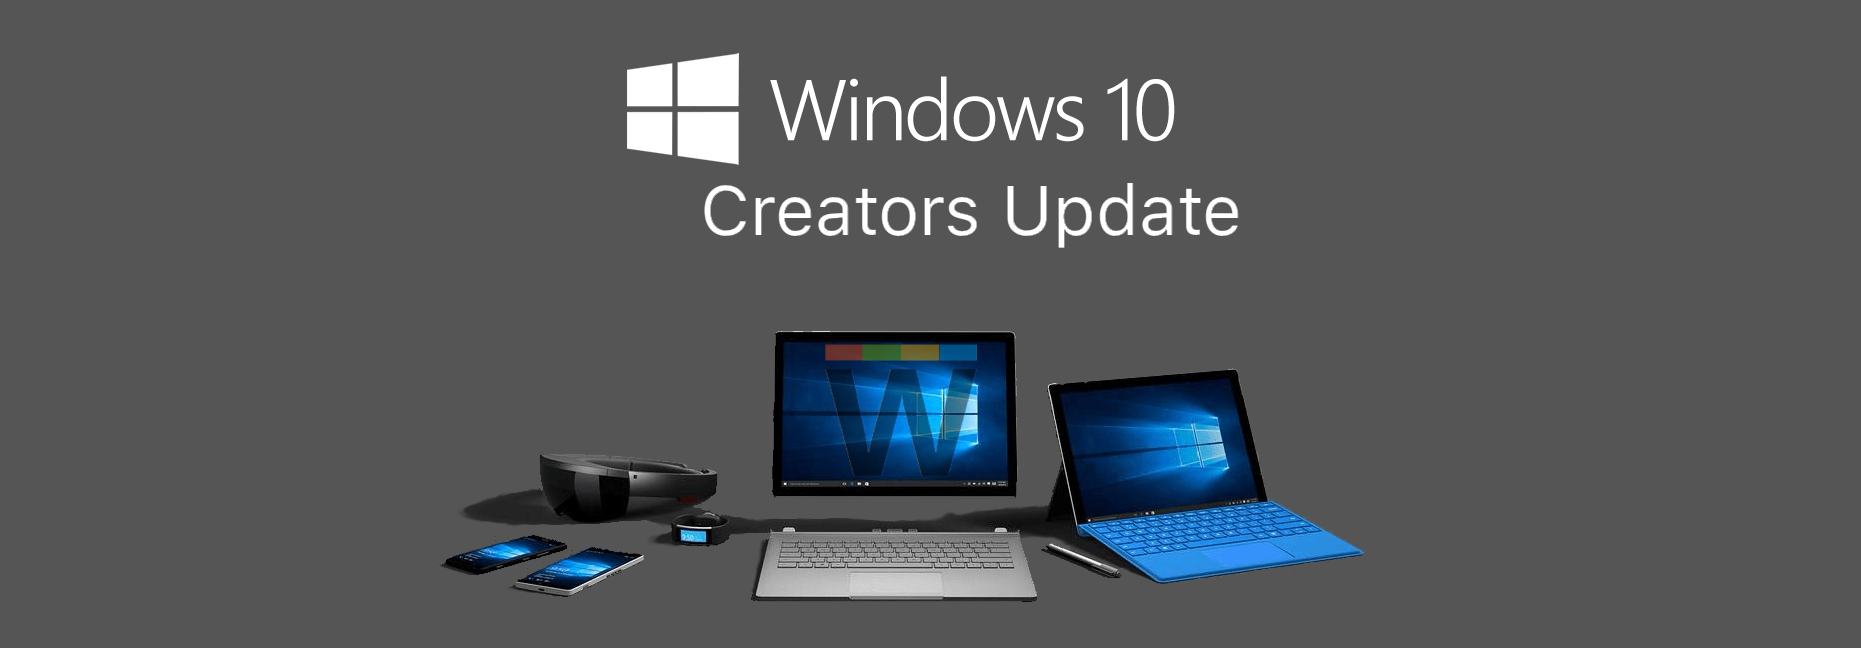 Devices Windows 10 creators update banner